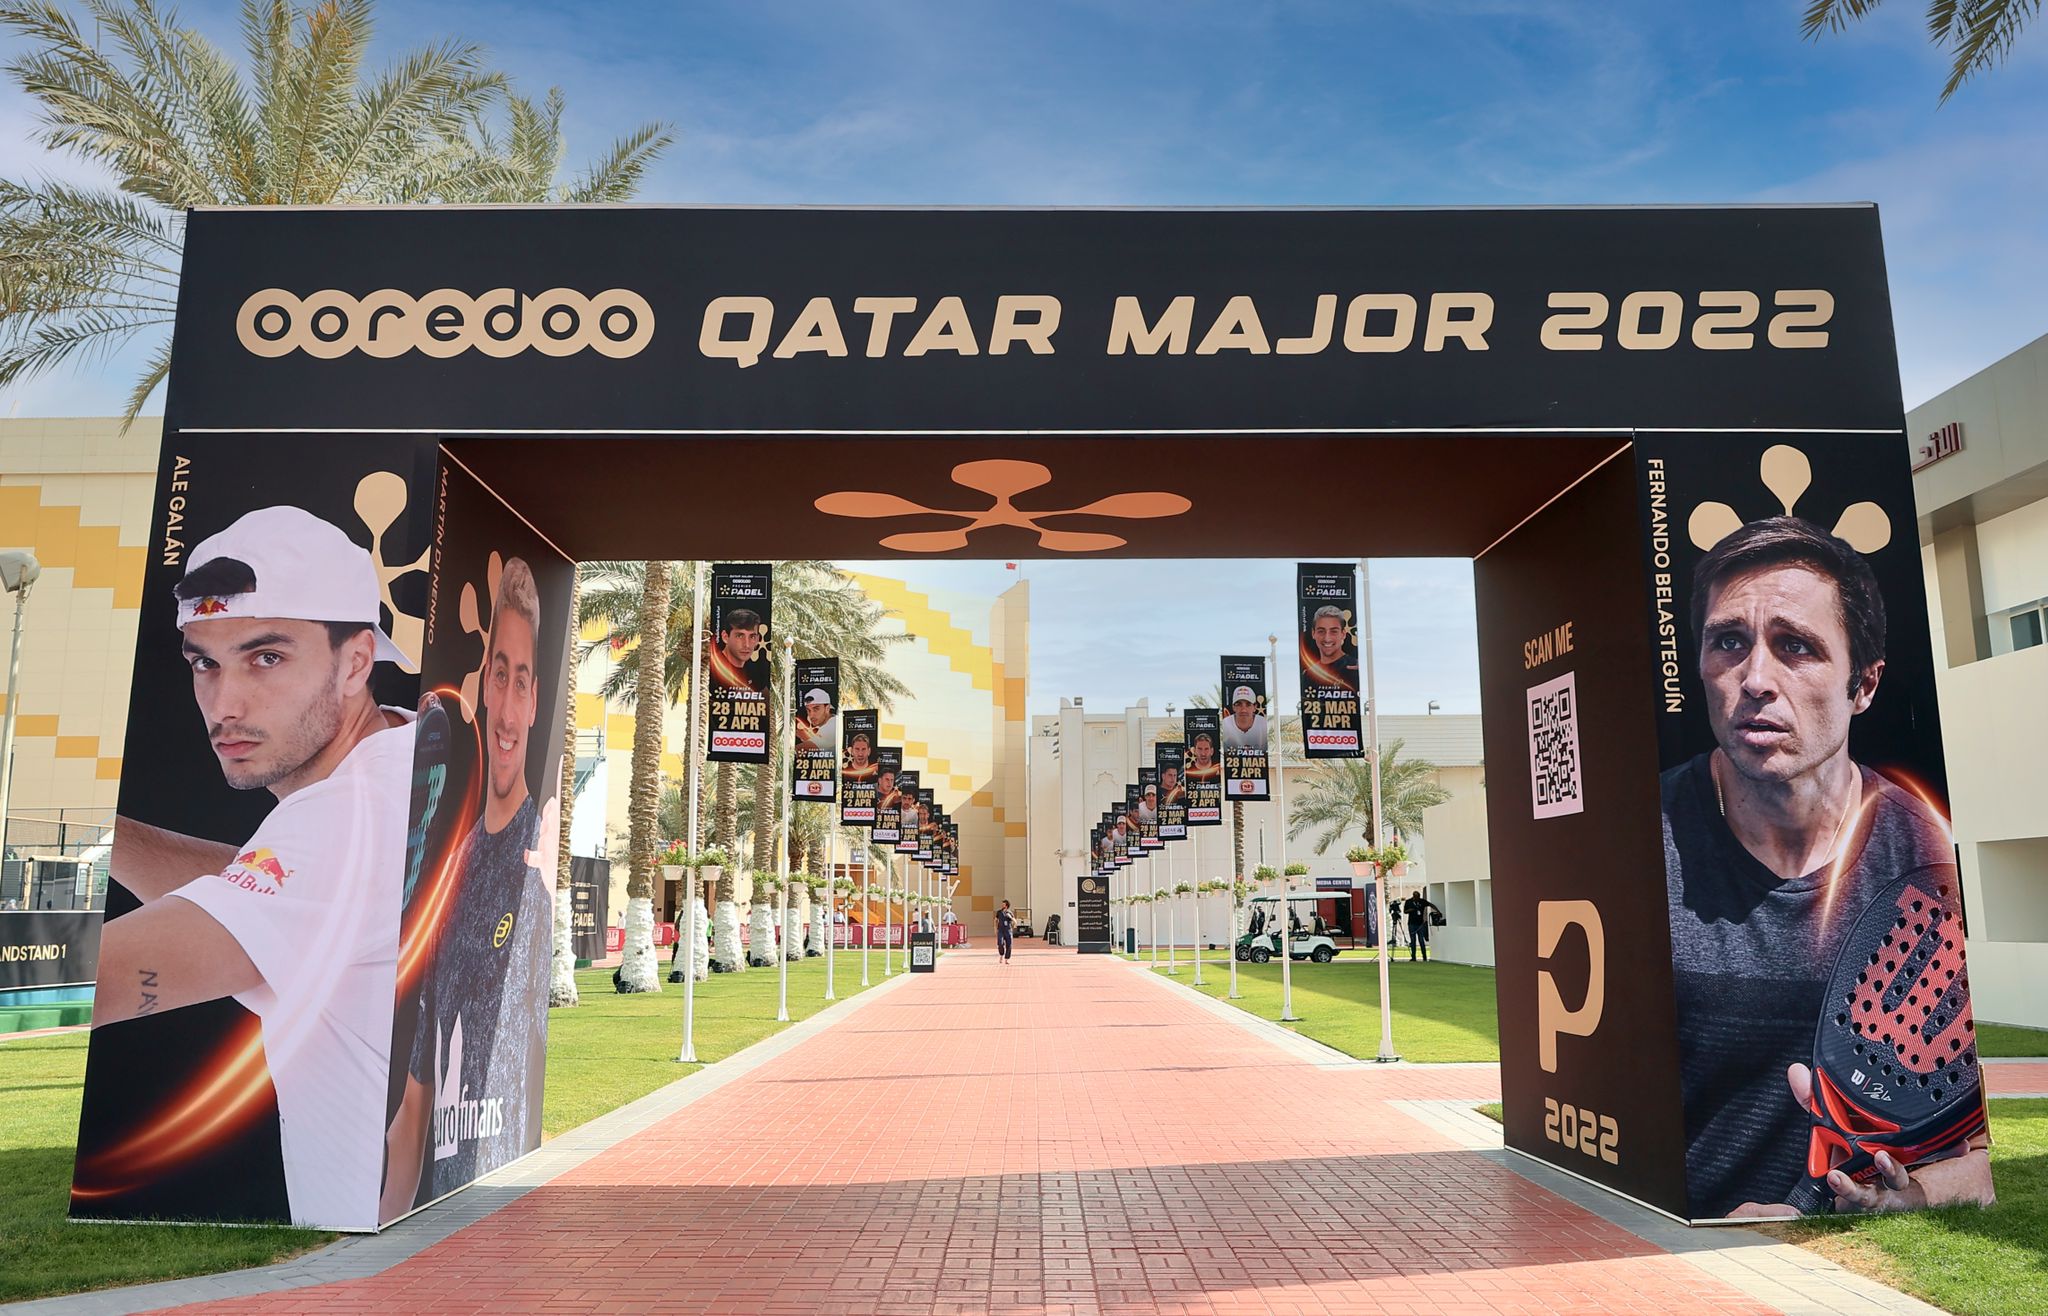 Entrée Khalifa Doha Qatar Major 2022